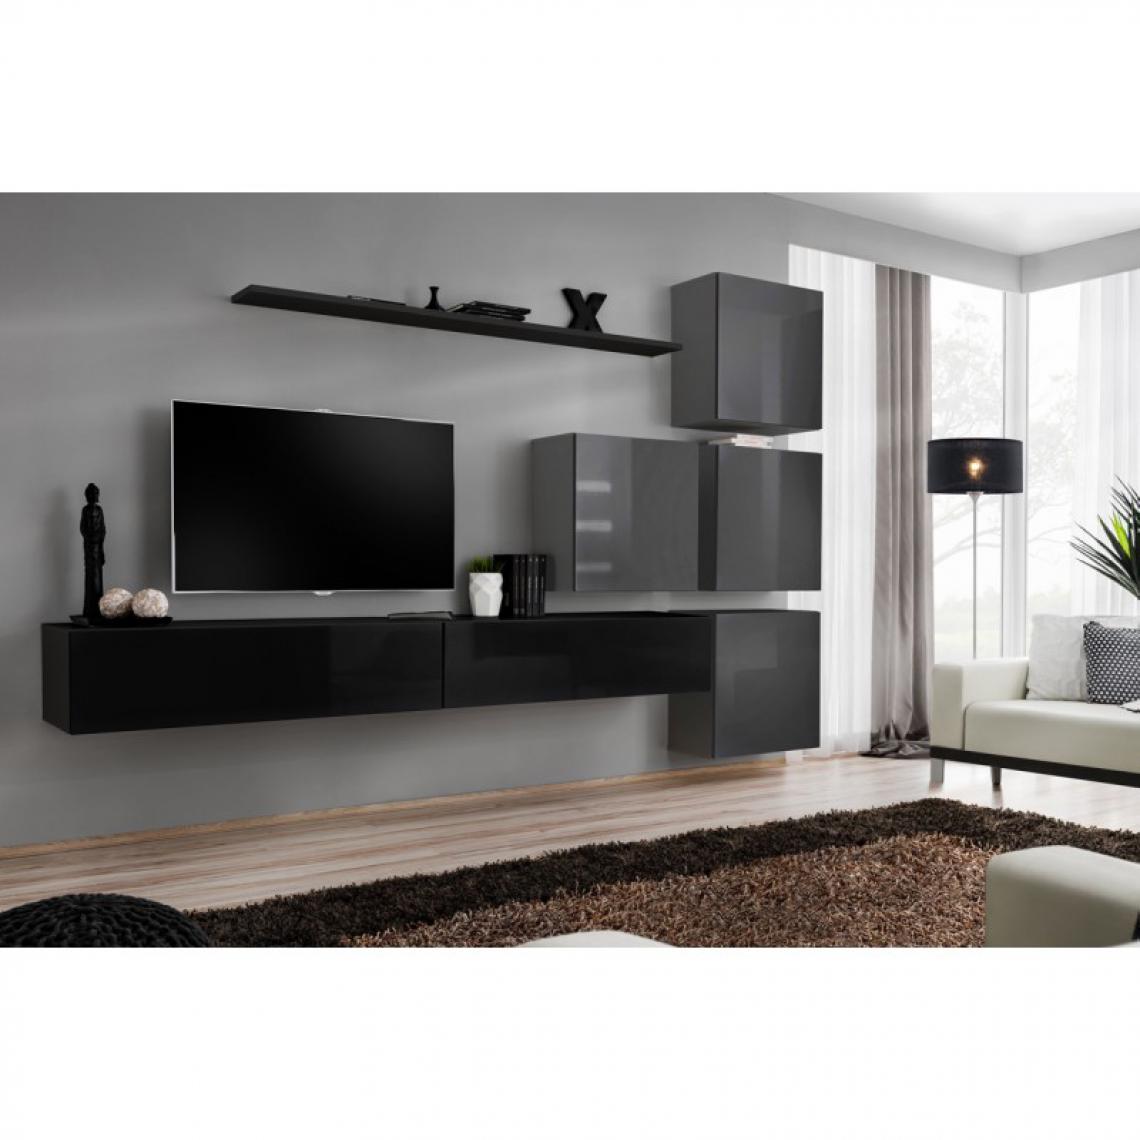 Ac-Deco - Meuble TV Mural Design Switch IX 310cm Noir & Gris - Meubles TV, Hi-Fi